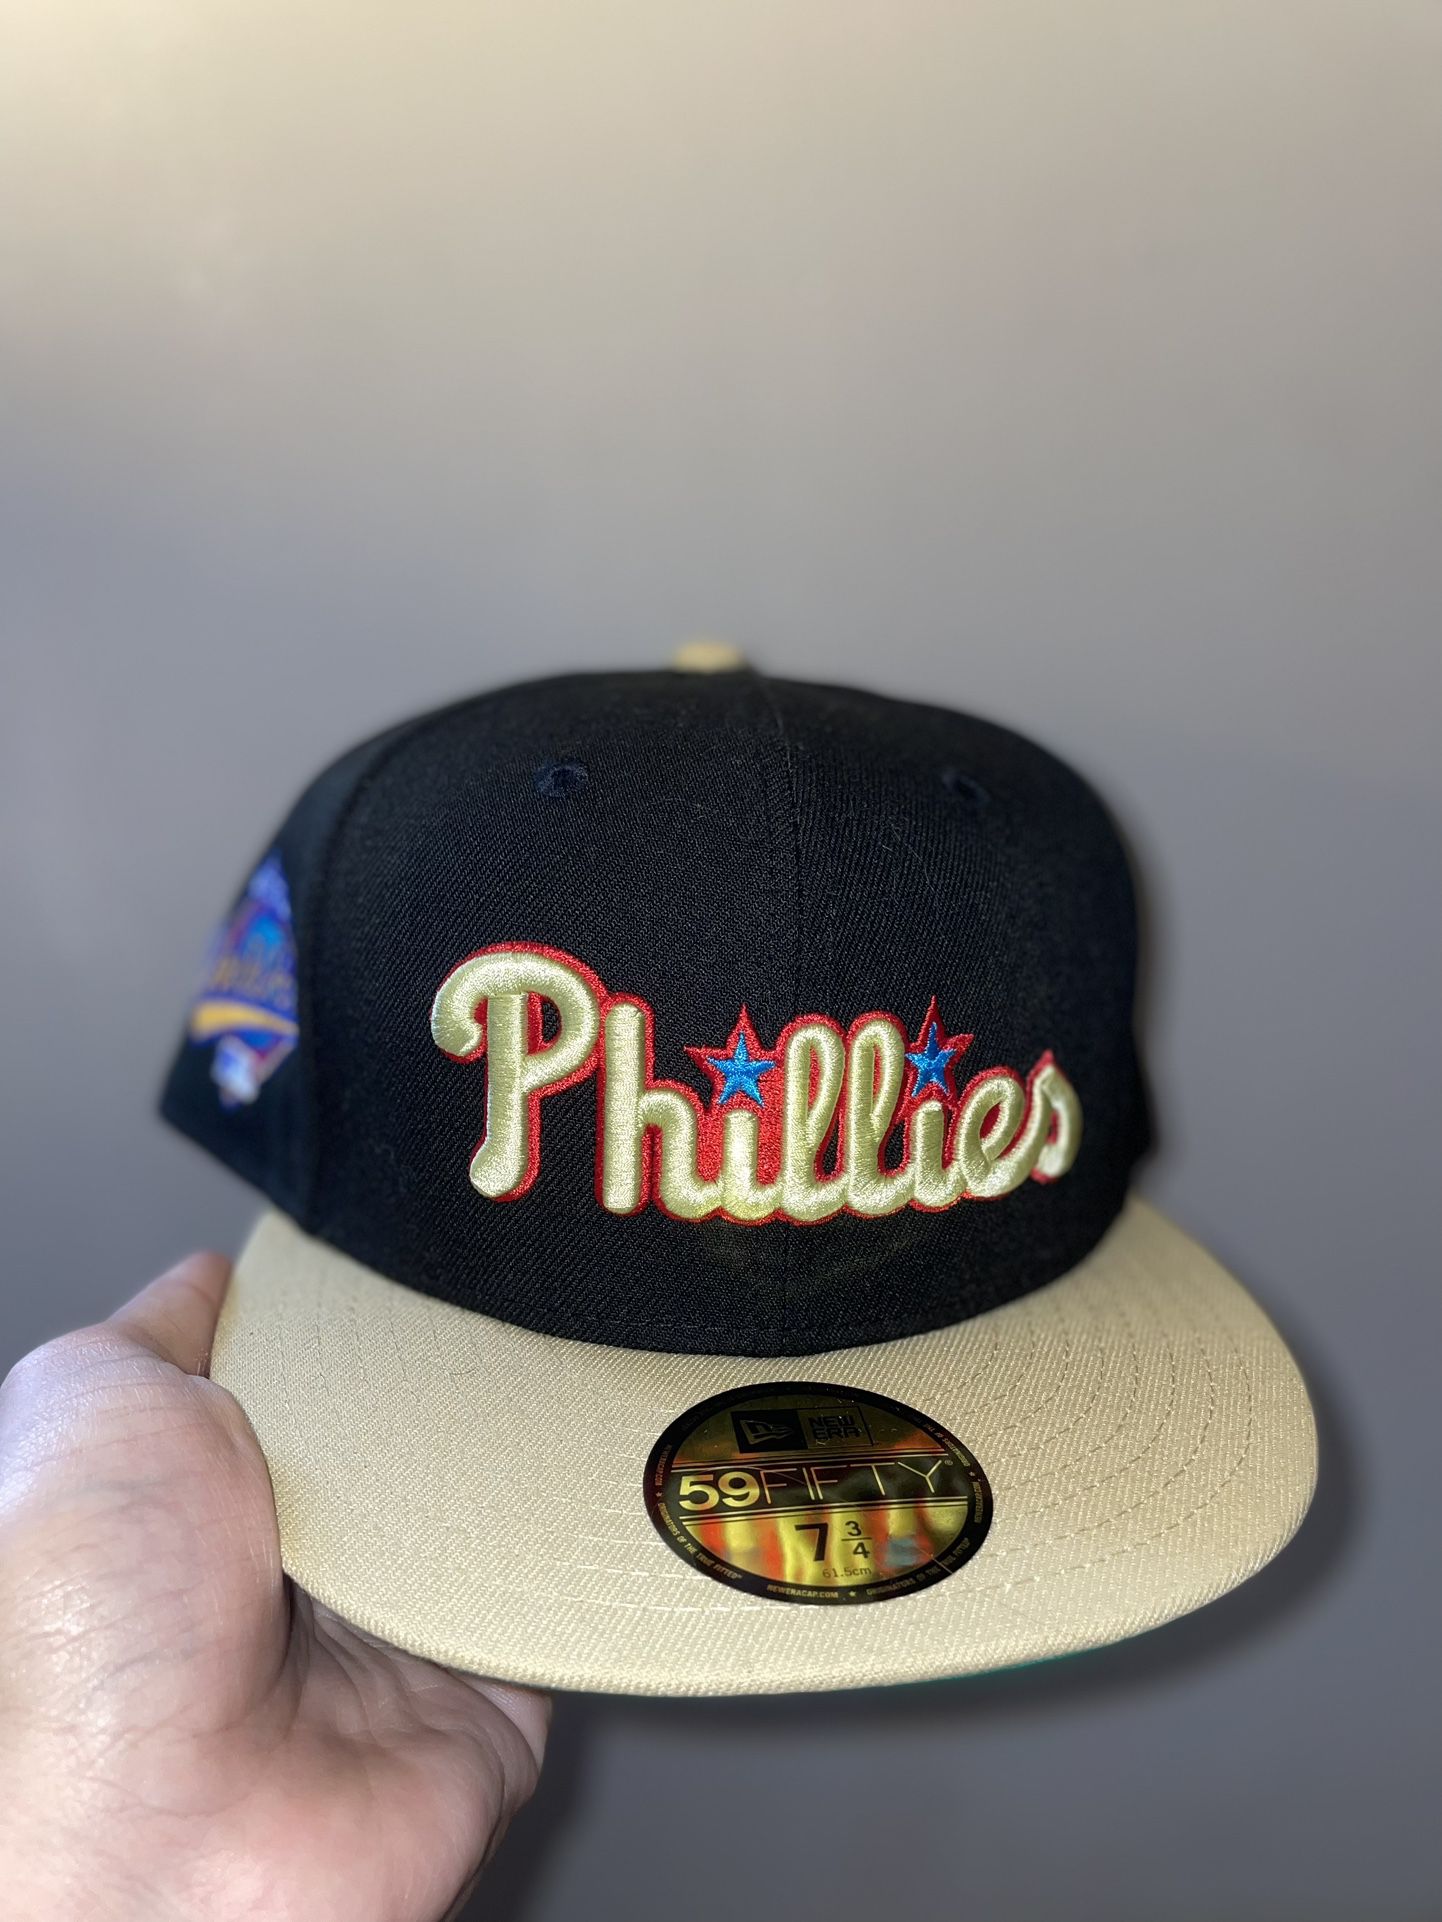 phillies 1993 world series hat